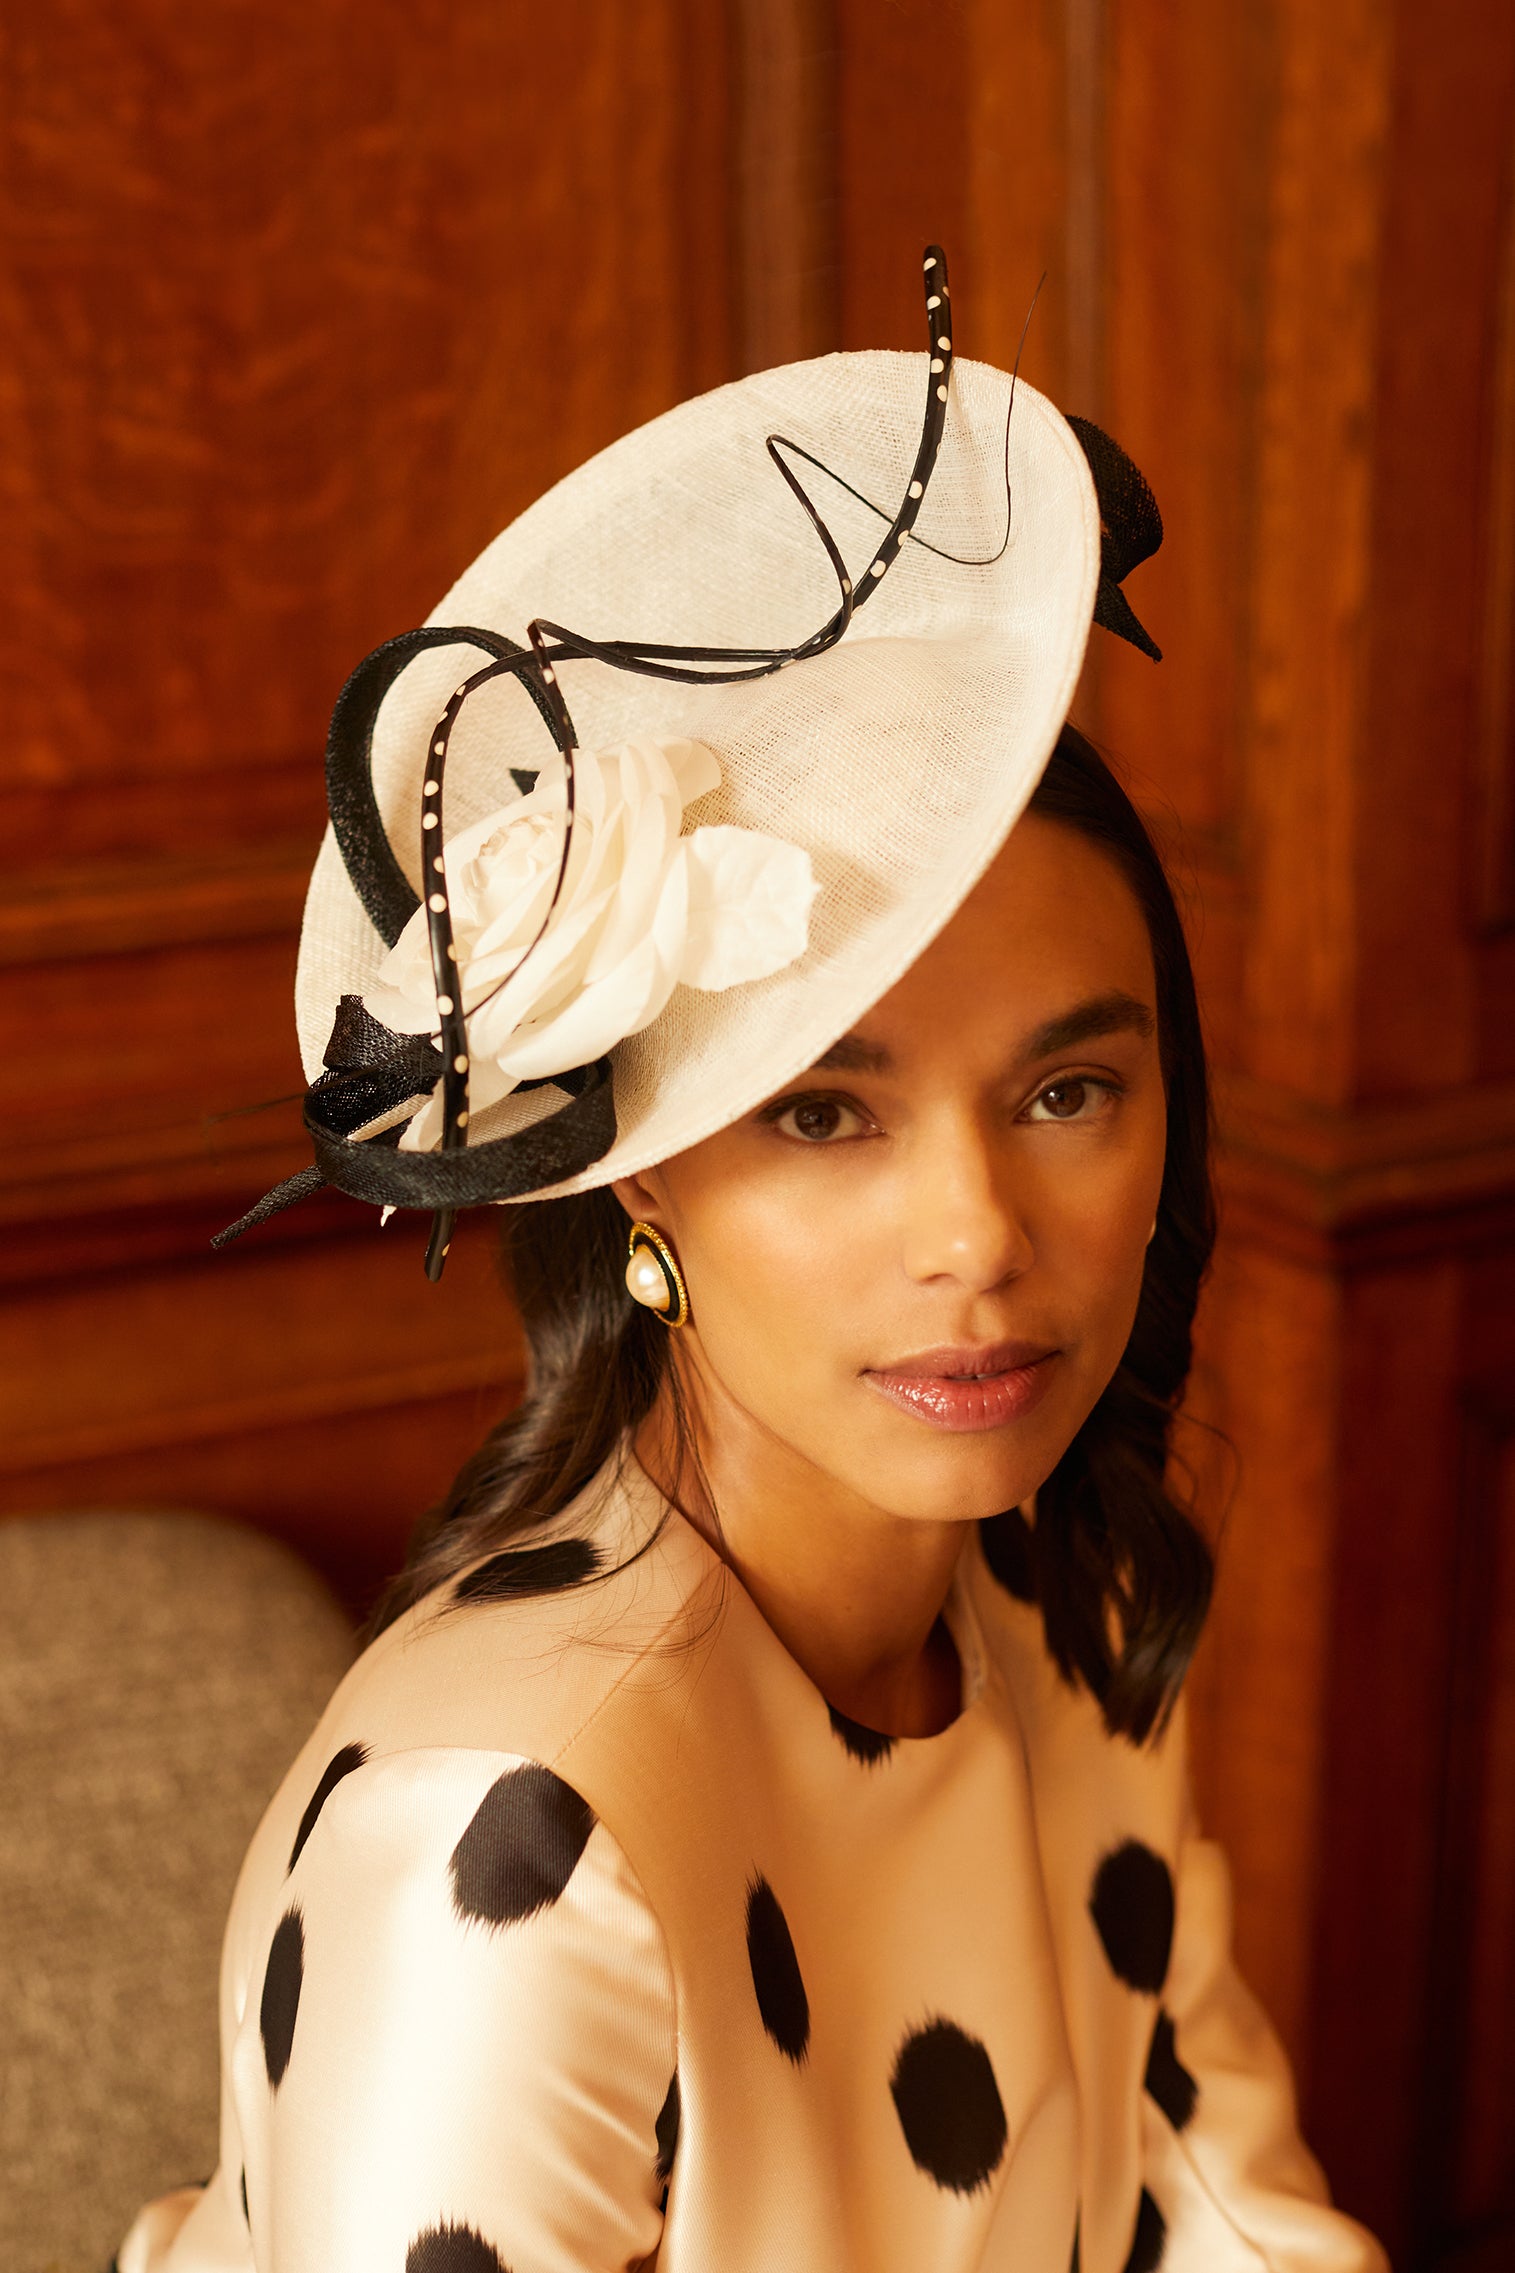 Assam White and Black Saucer Hat - New Season Women's Hats - Lock & Co. Hatters London UK